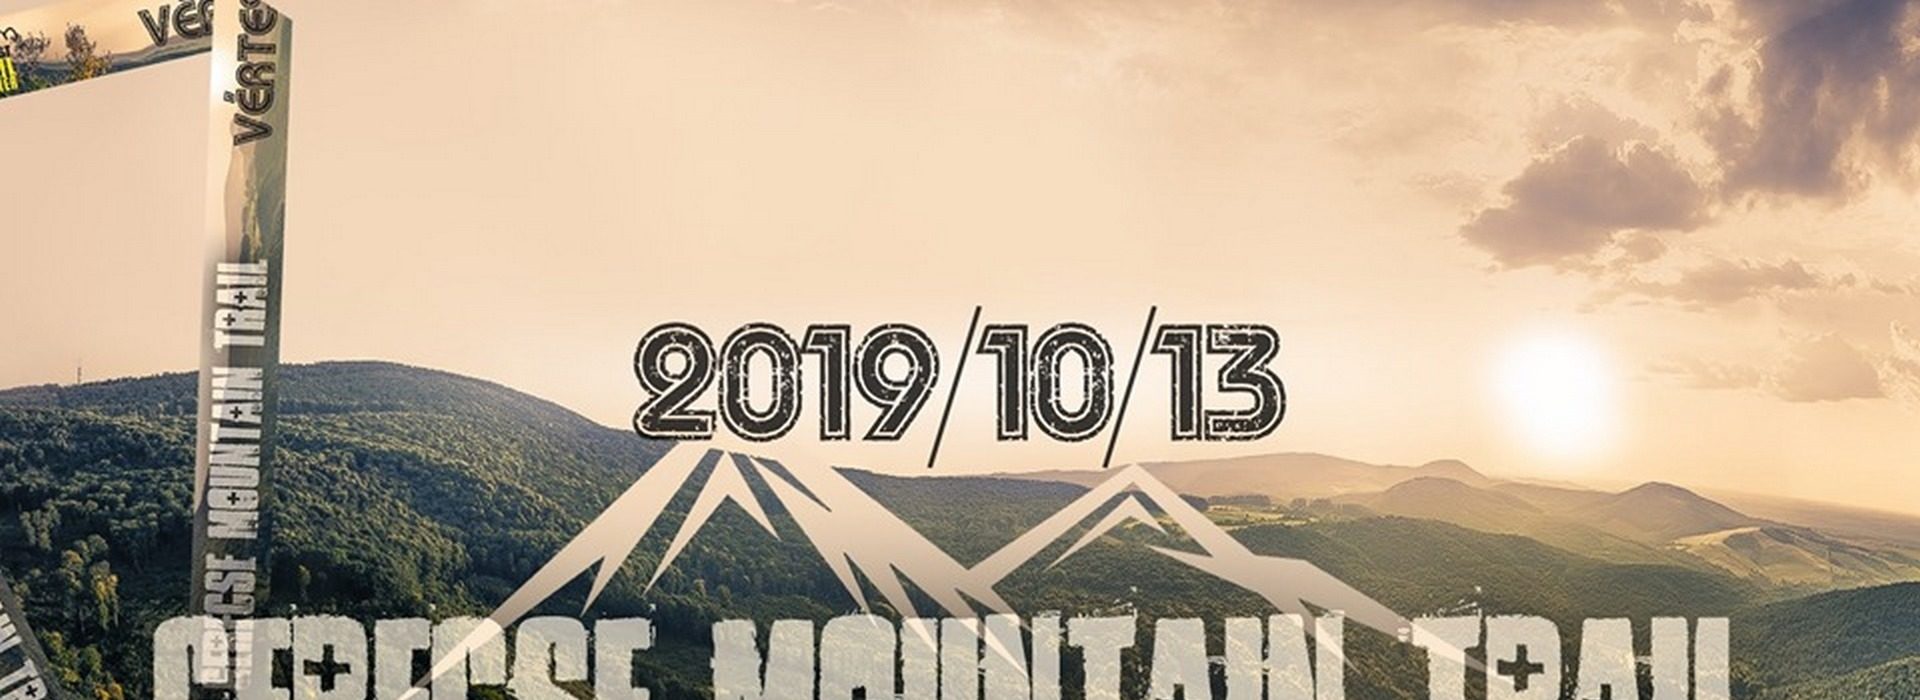 Gerecse Mountain Trail 2019